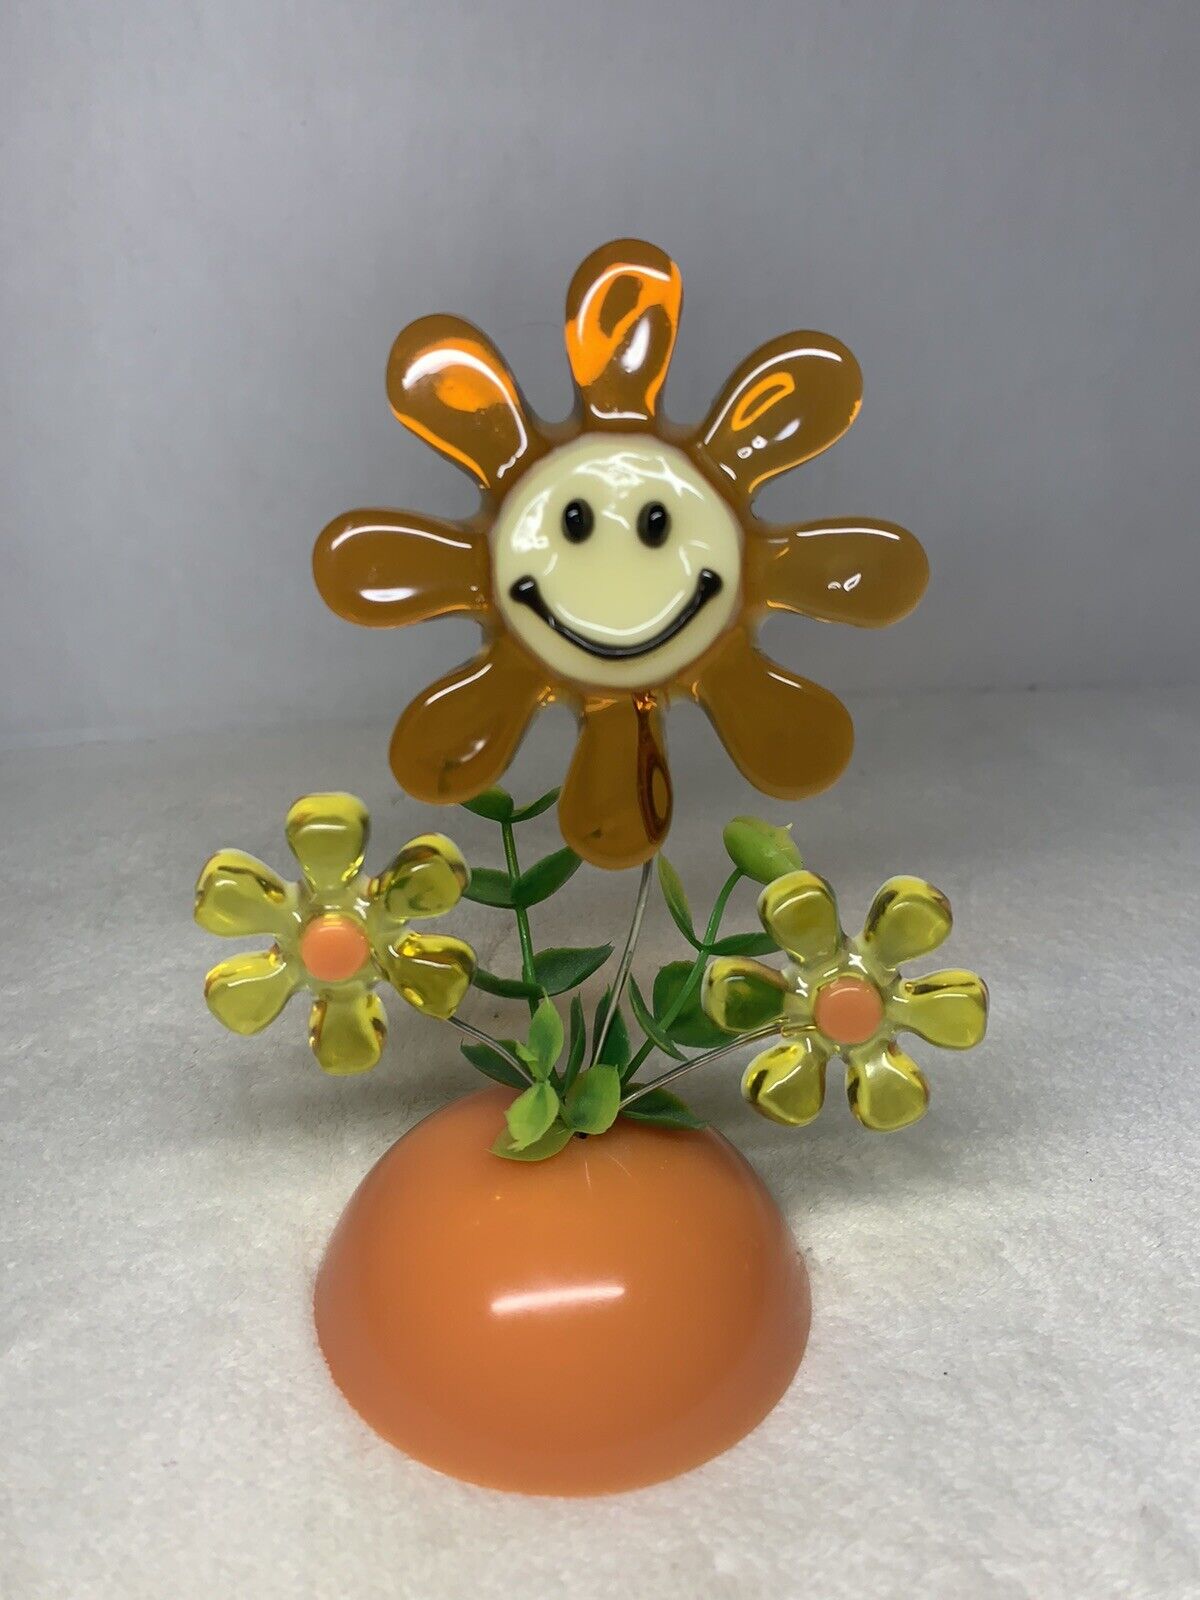 Vintage 70s Smiley Daisy Flower Power Sculpture acrylic resin lucite Mid Century